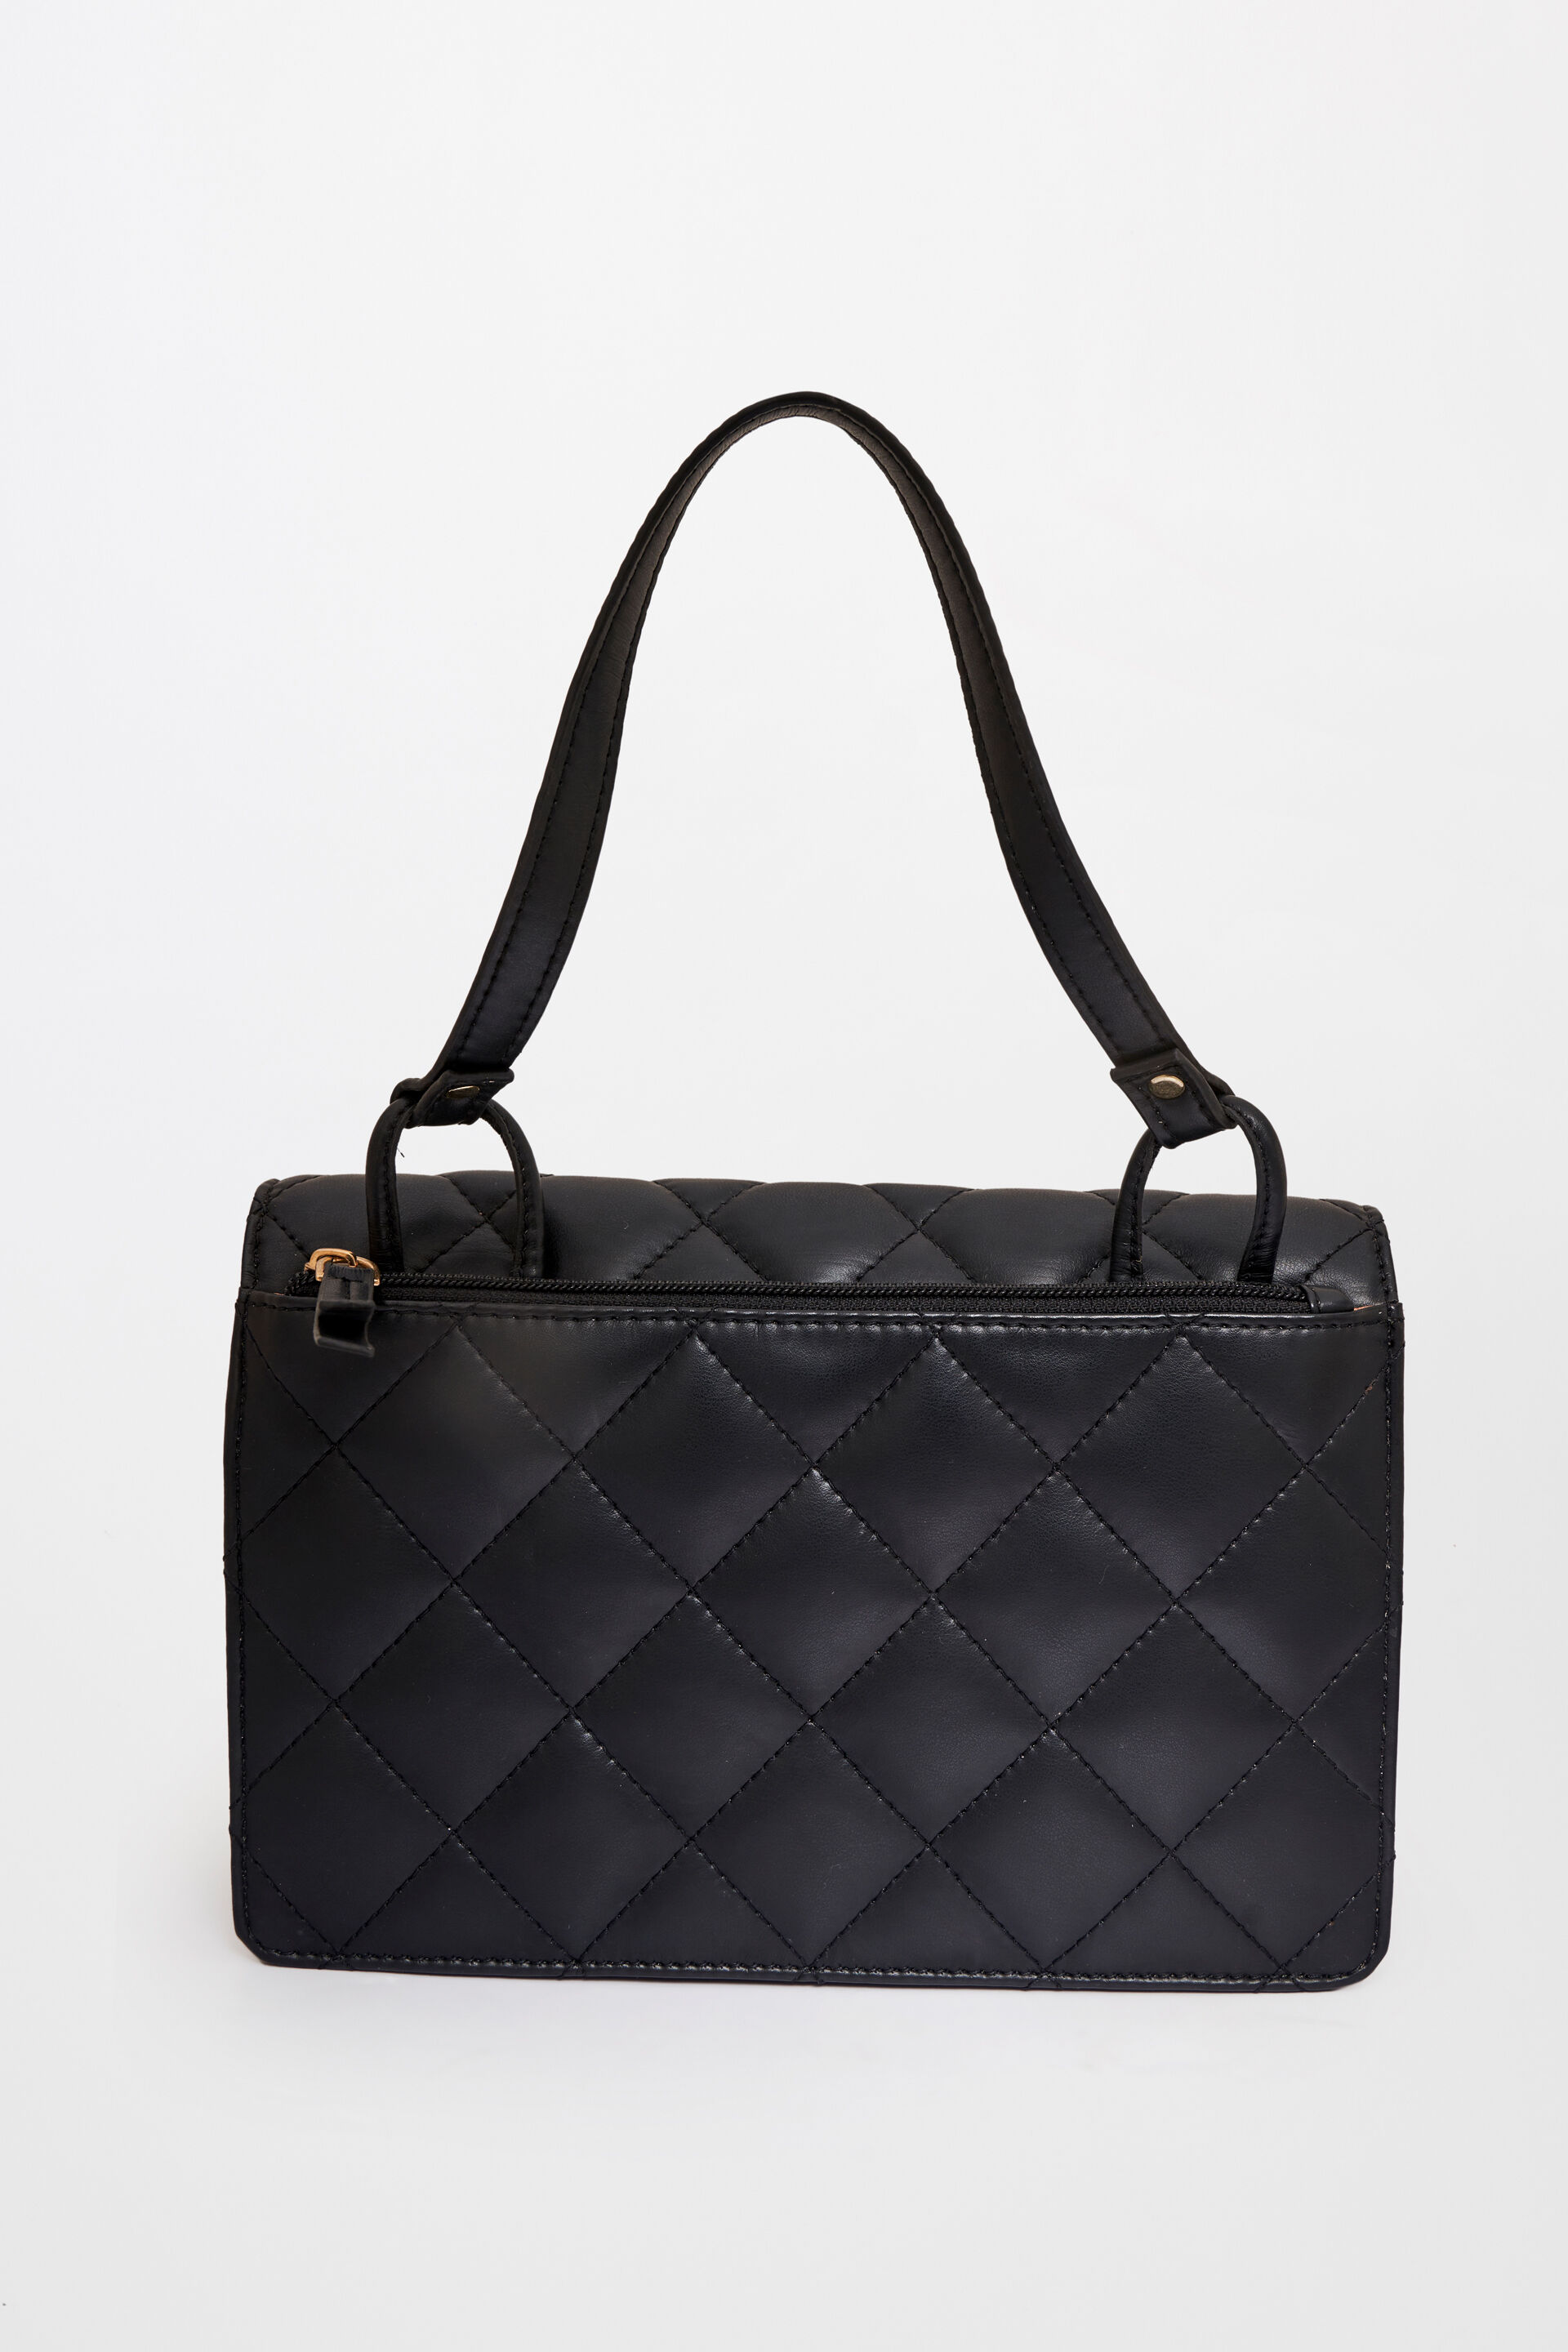 Buy Coach Grey & Black Handbag - Handbags for Women 1128130 | Myntra